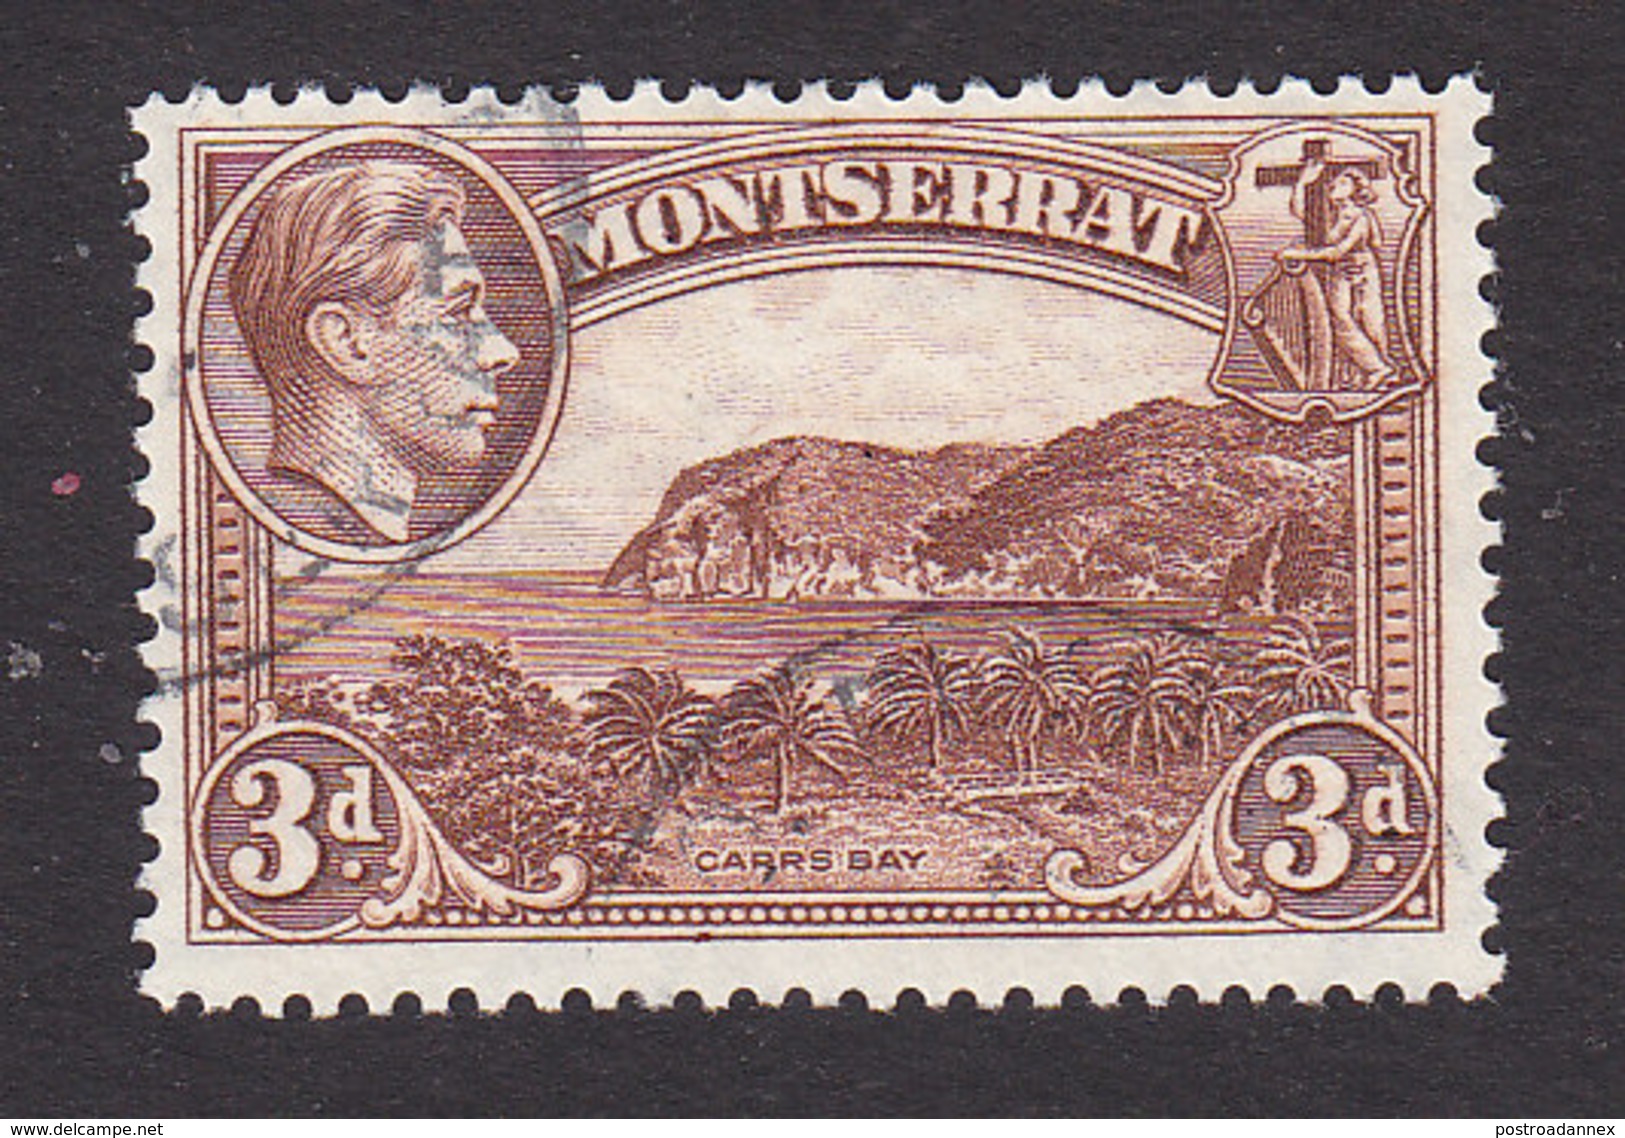 Montserrat, Scott #97a, Used, Carr's Bay, Issued 1941 - Montserrat